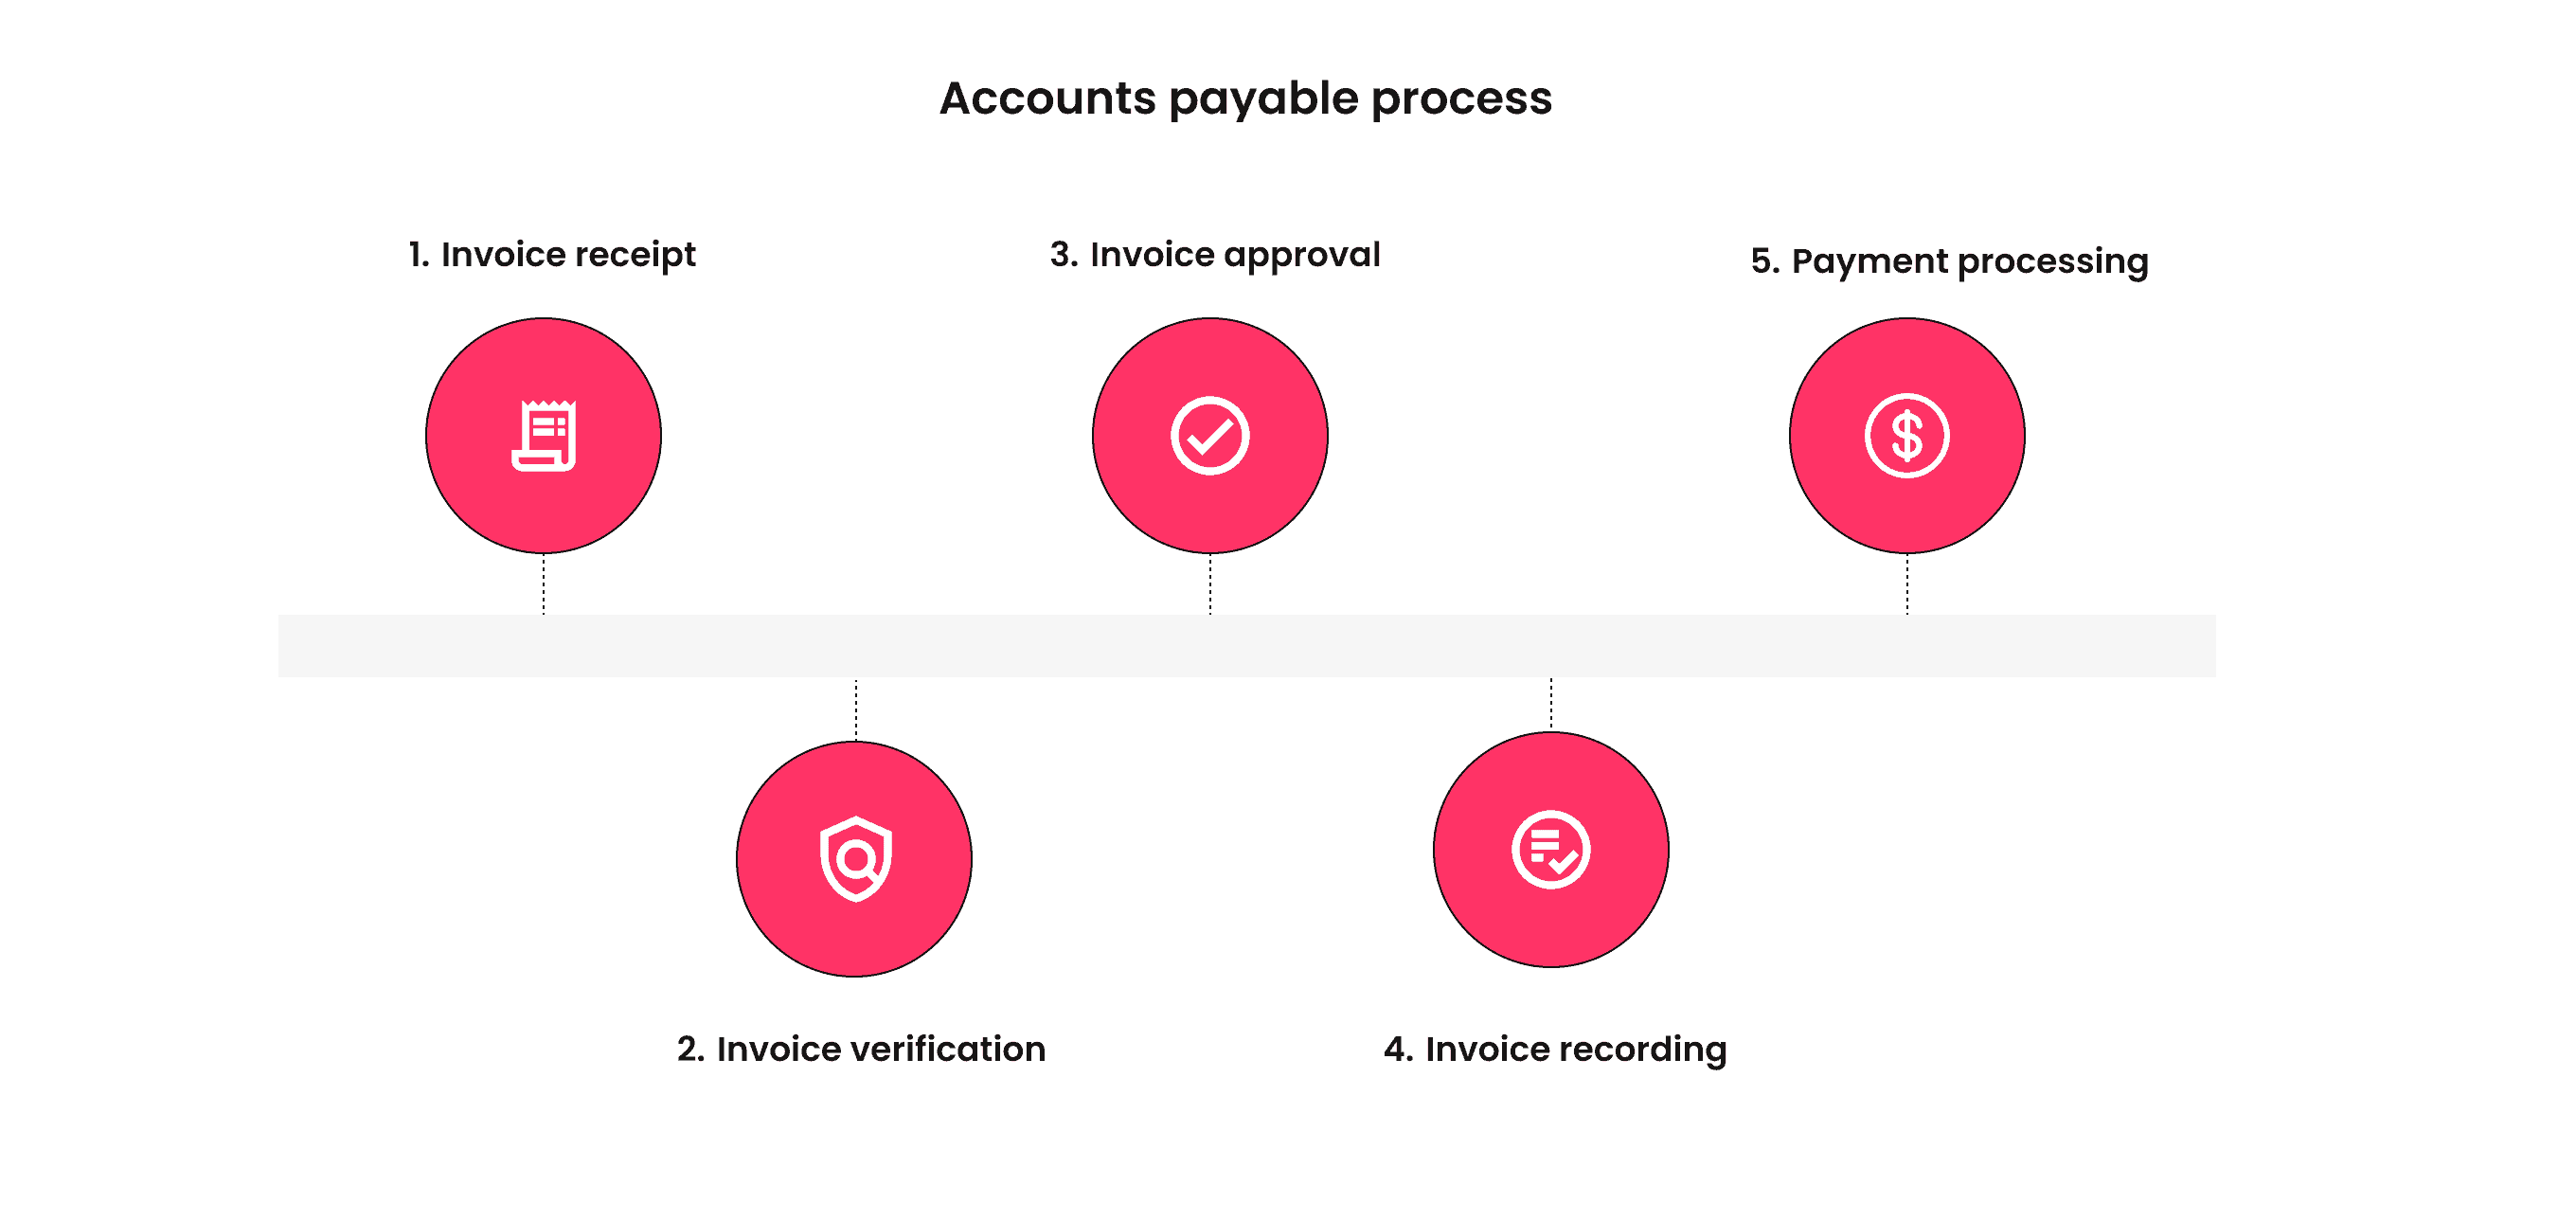 Accounts payable process